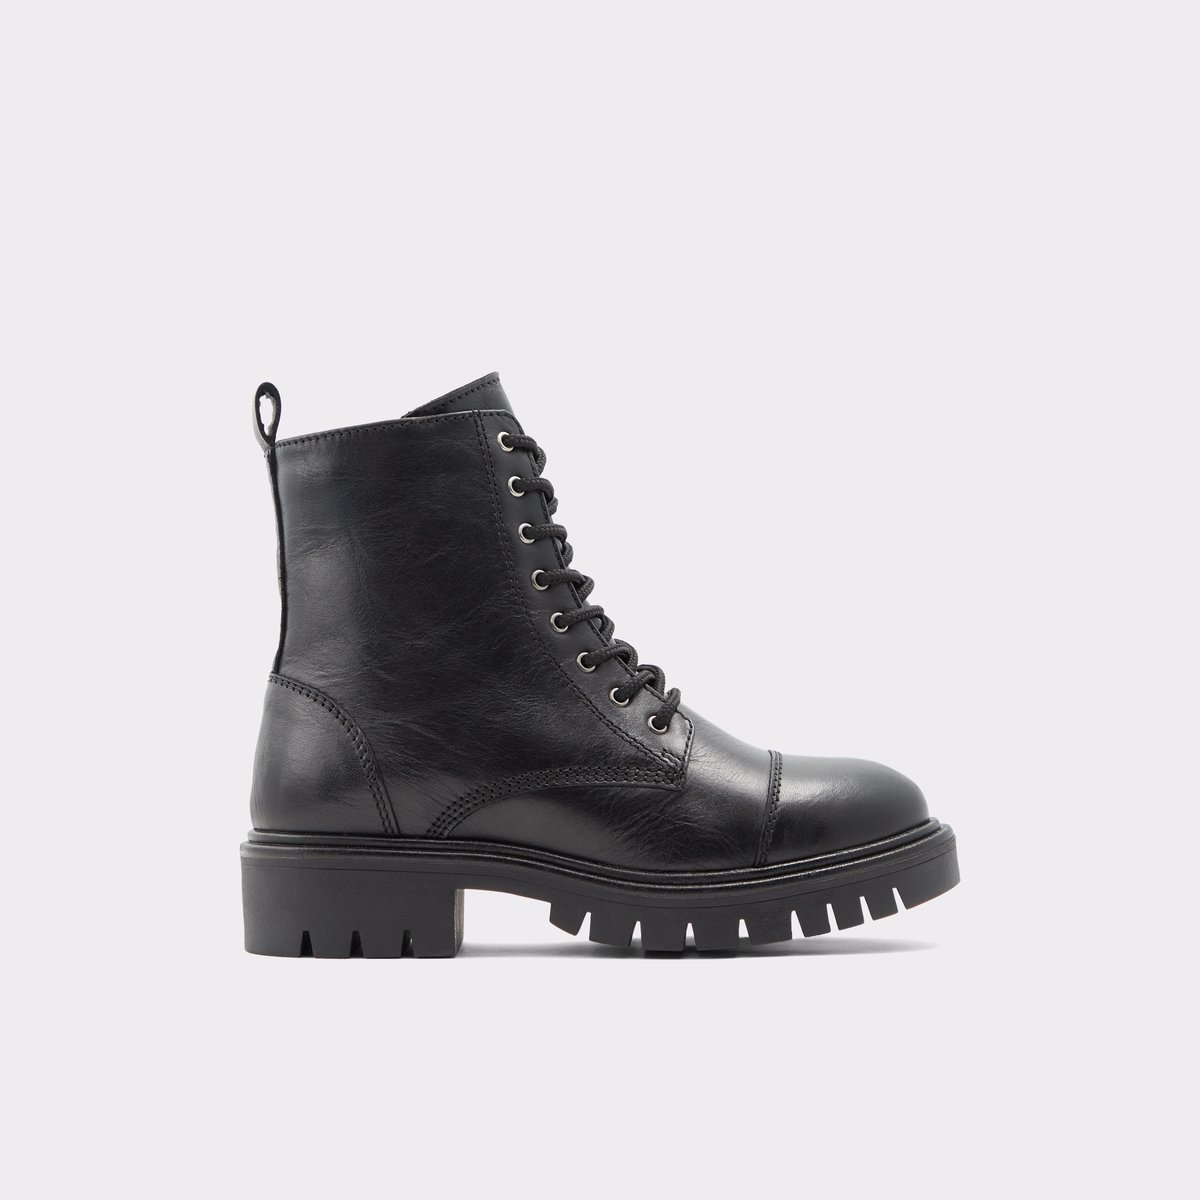 Gwemma Black Leather Smooth Women's Waterproof boots | ALDO US